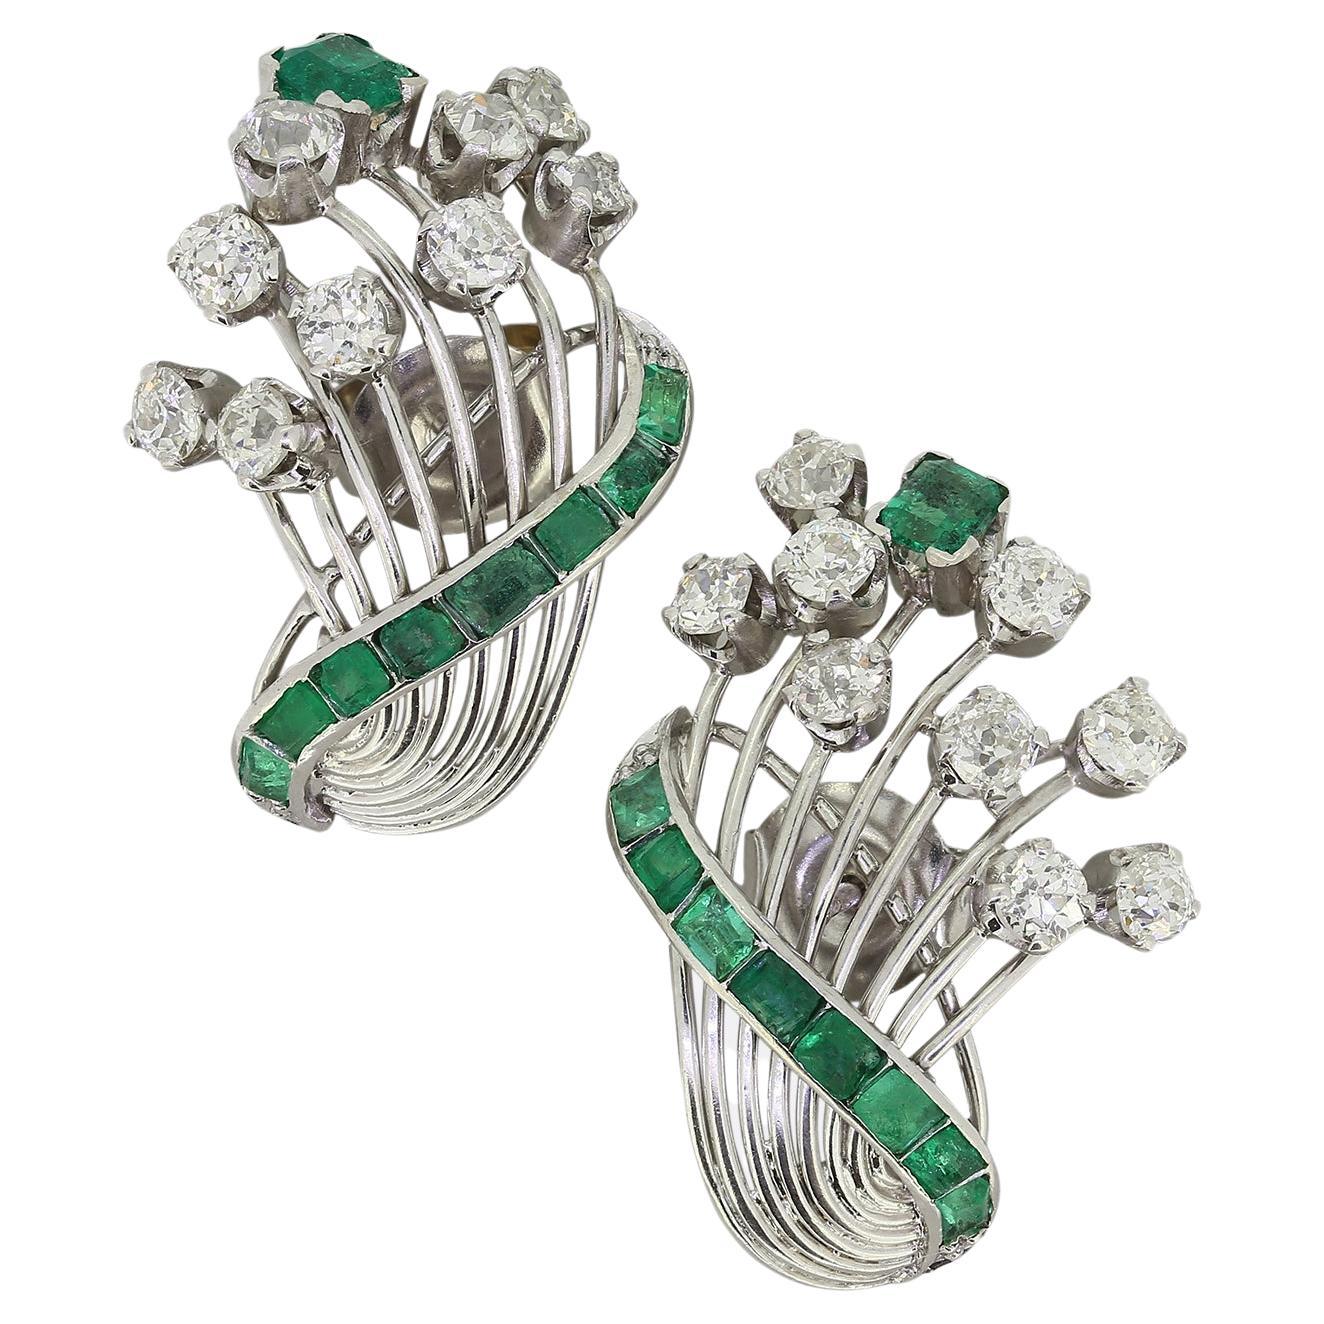 Retro 1950s Emerald and Diamond Earrings